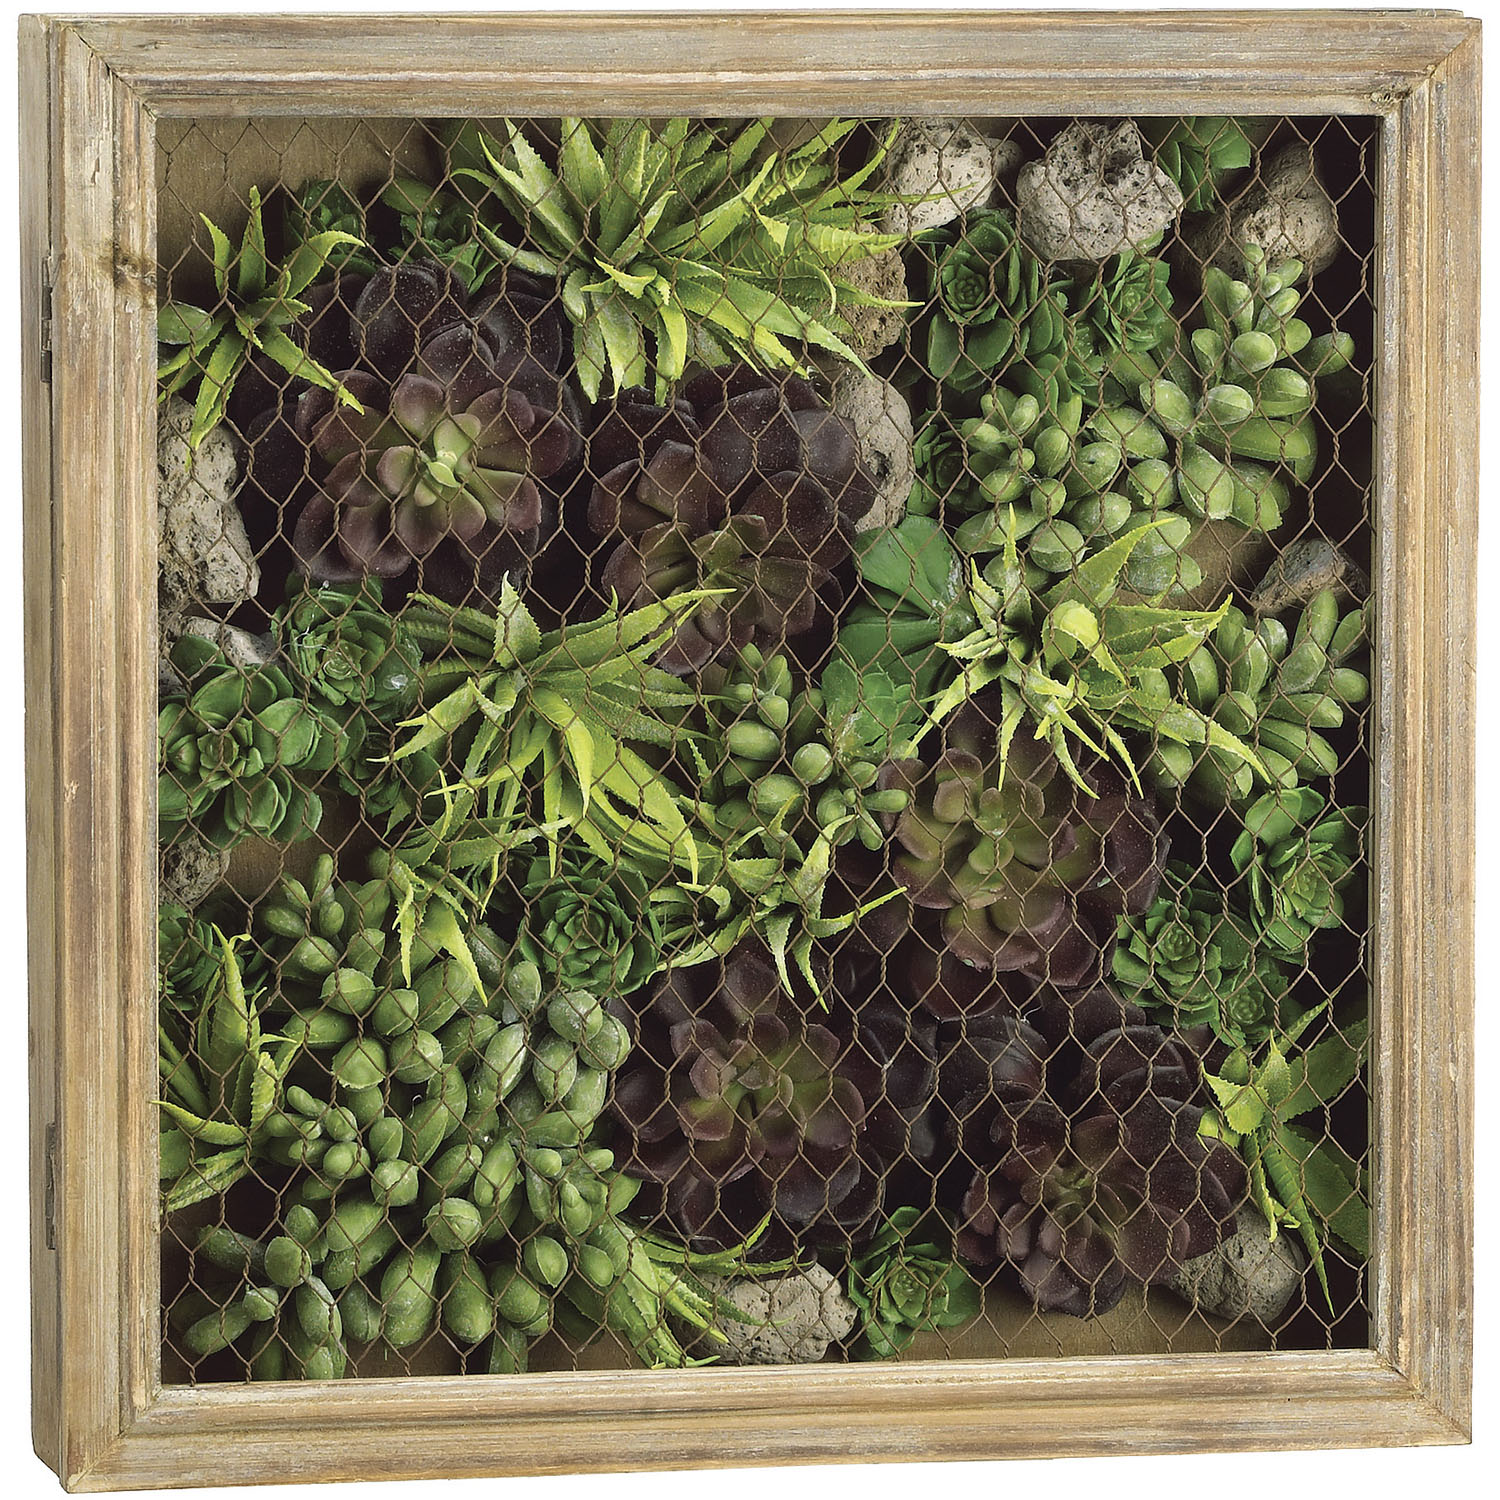 16 Inch Echeveria, Aloe, Sedum Arrangement In Square Wood Mesh Box